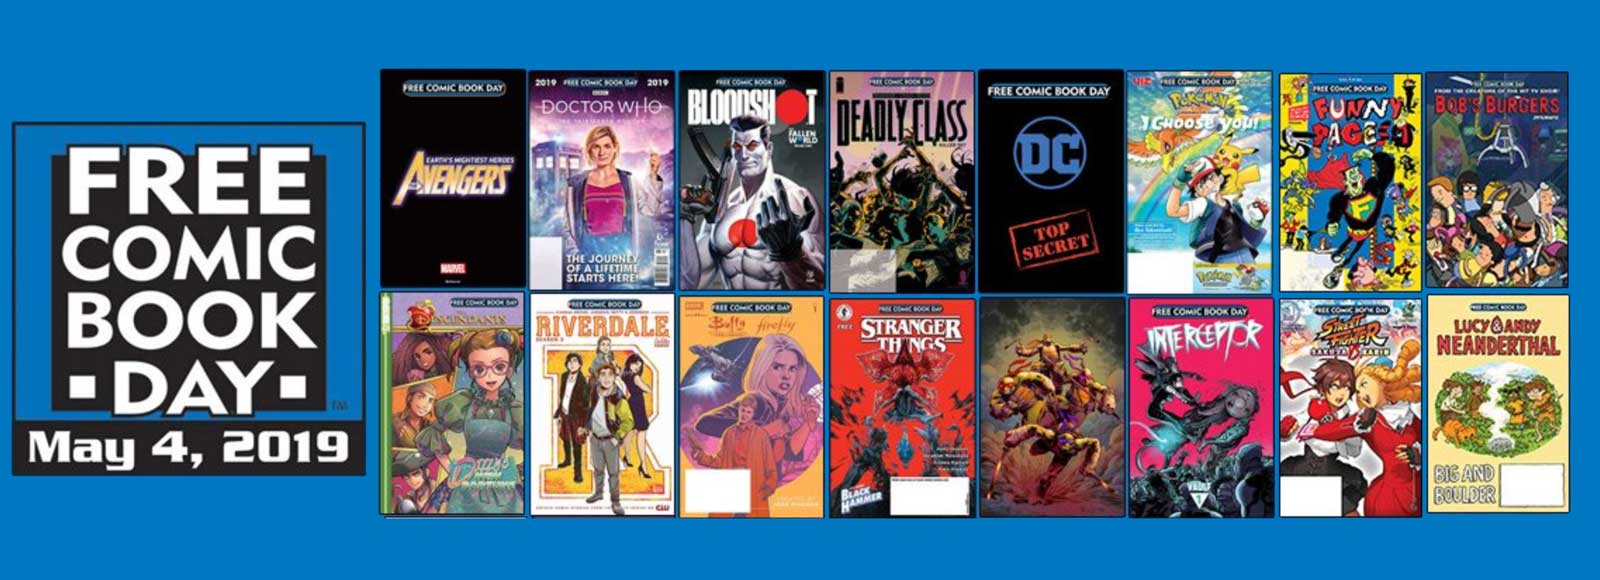 free comic book day 2019 list